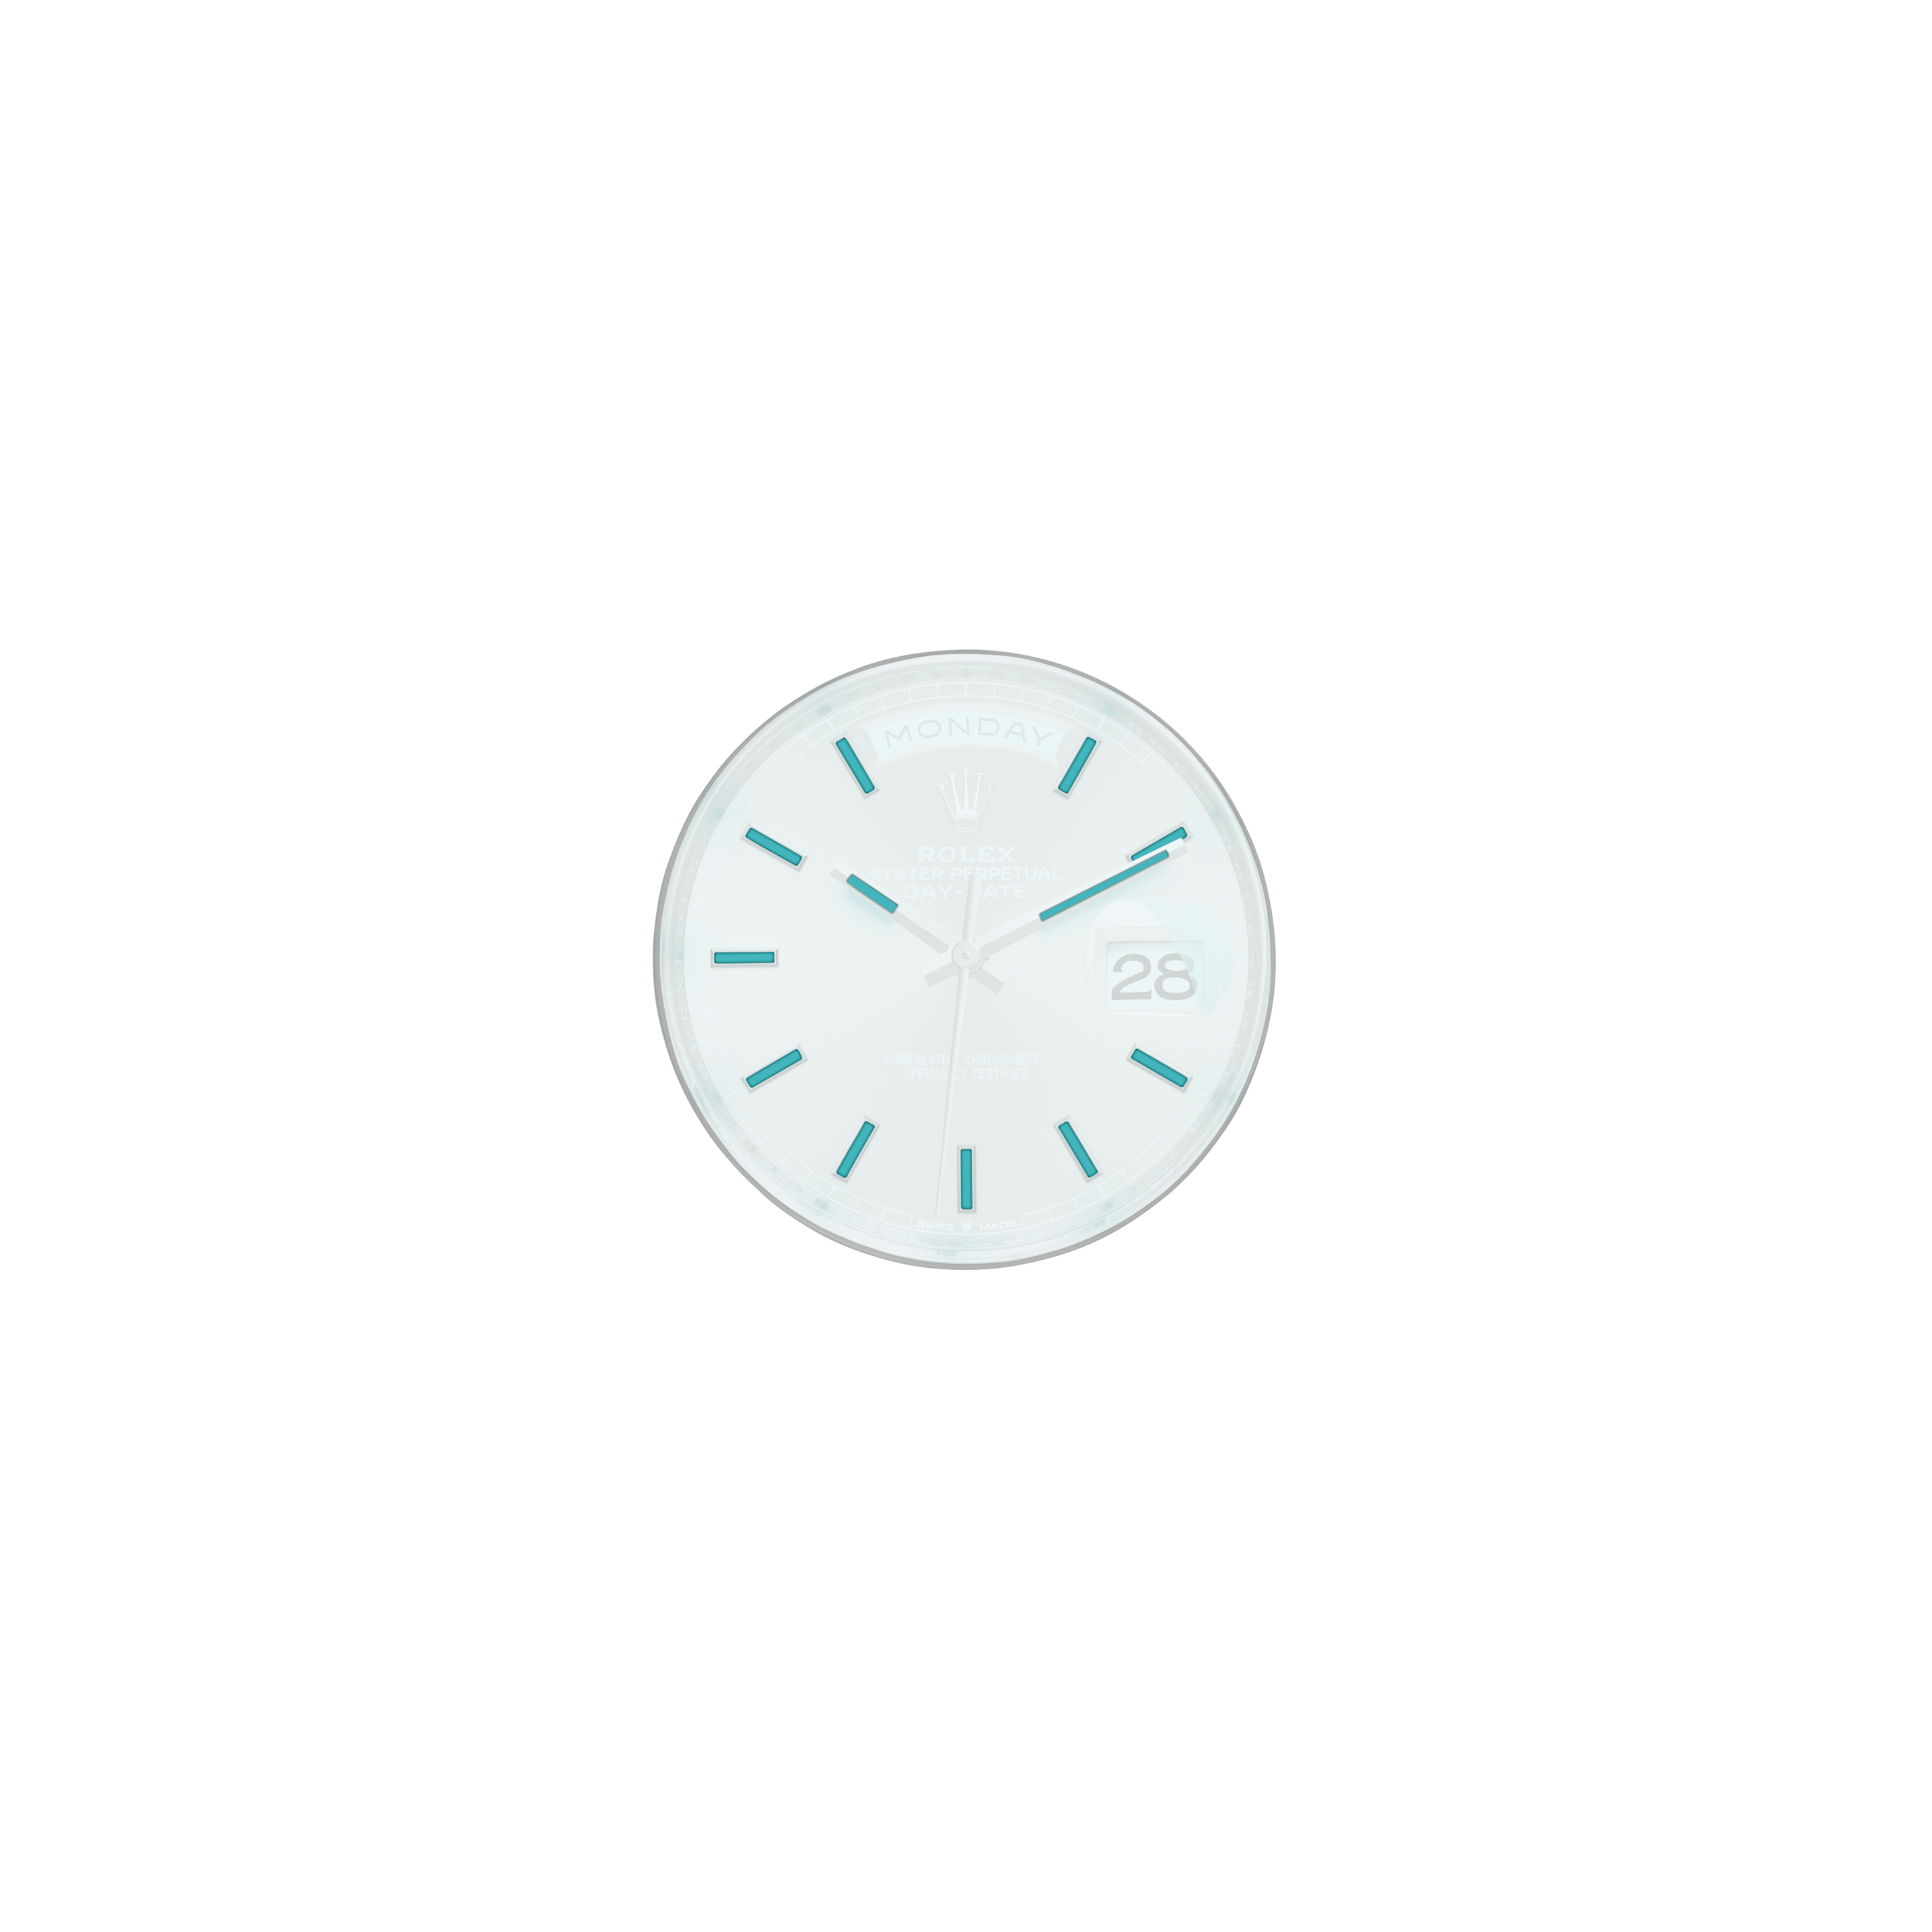 Rolex 116233 Datejust Two Tone Black “Rolex” Pyramid Dial Watch